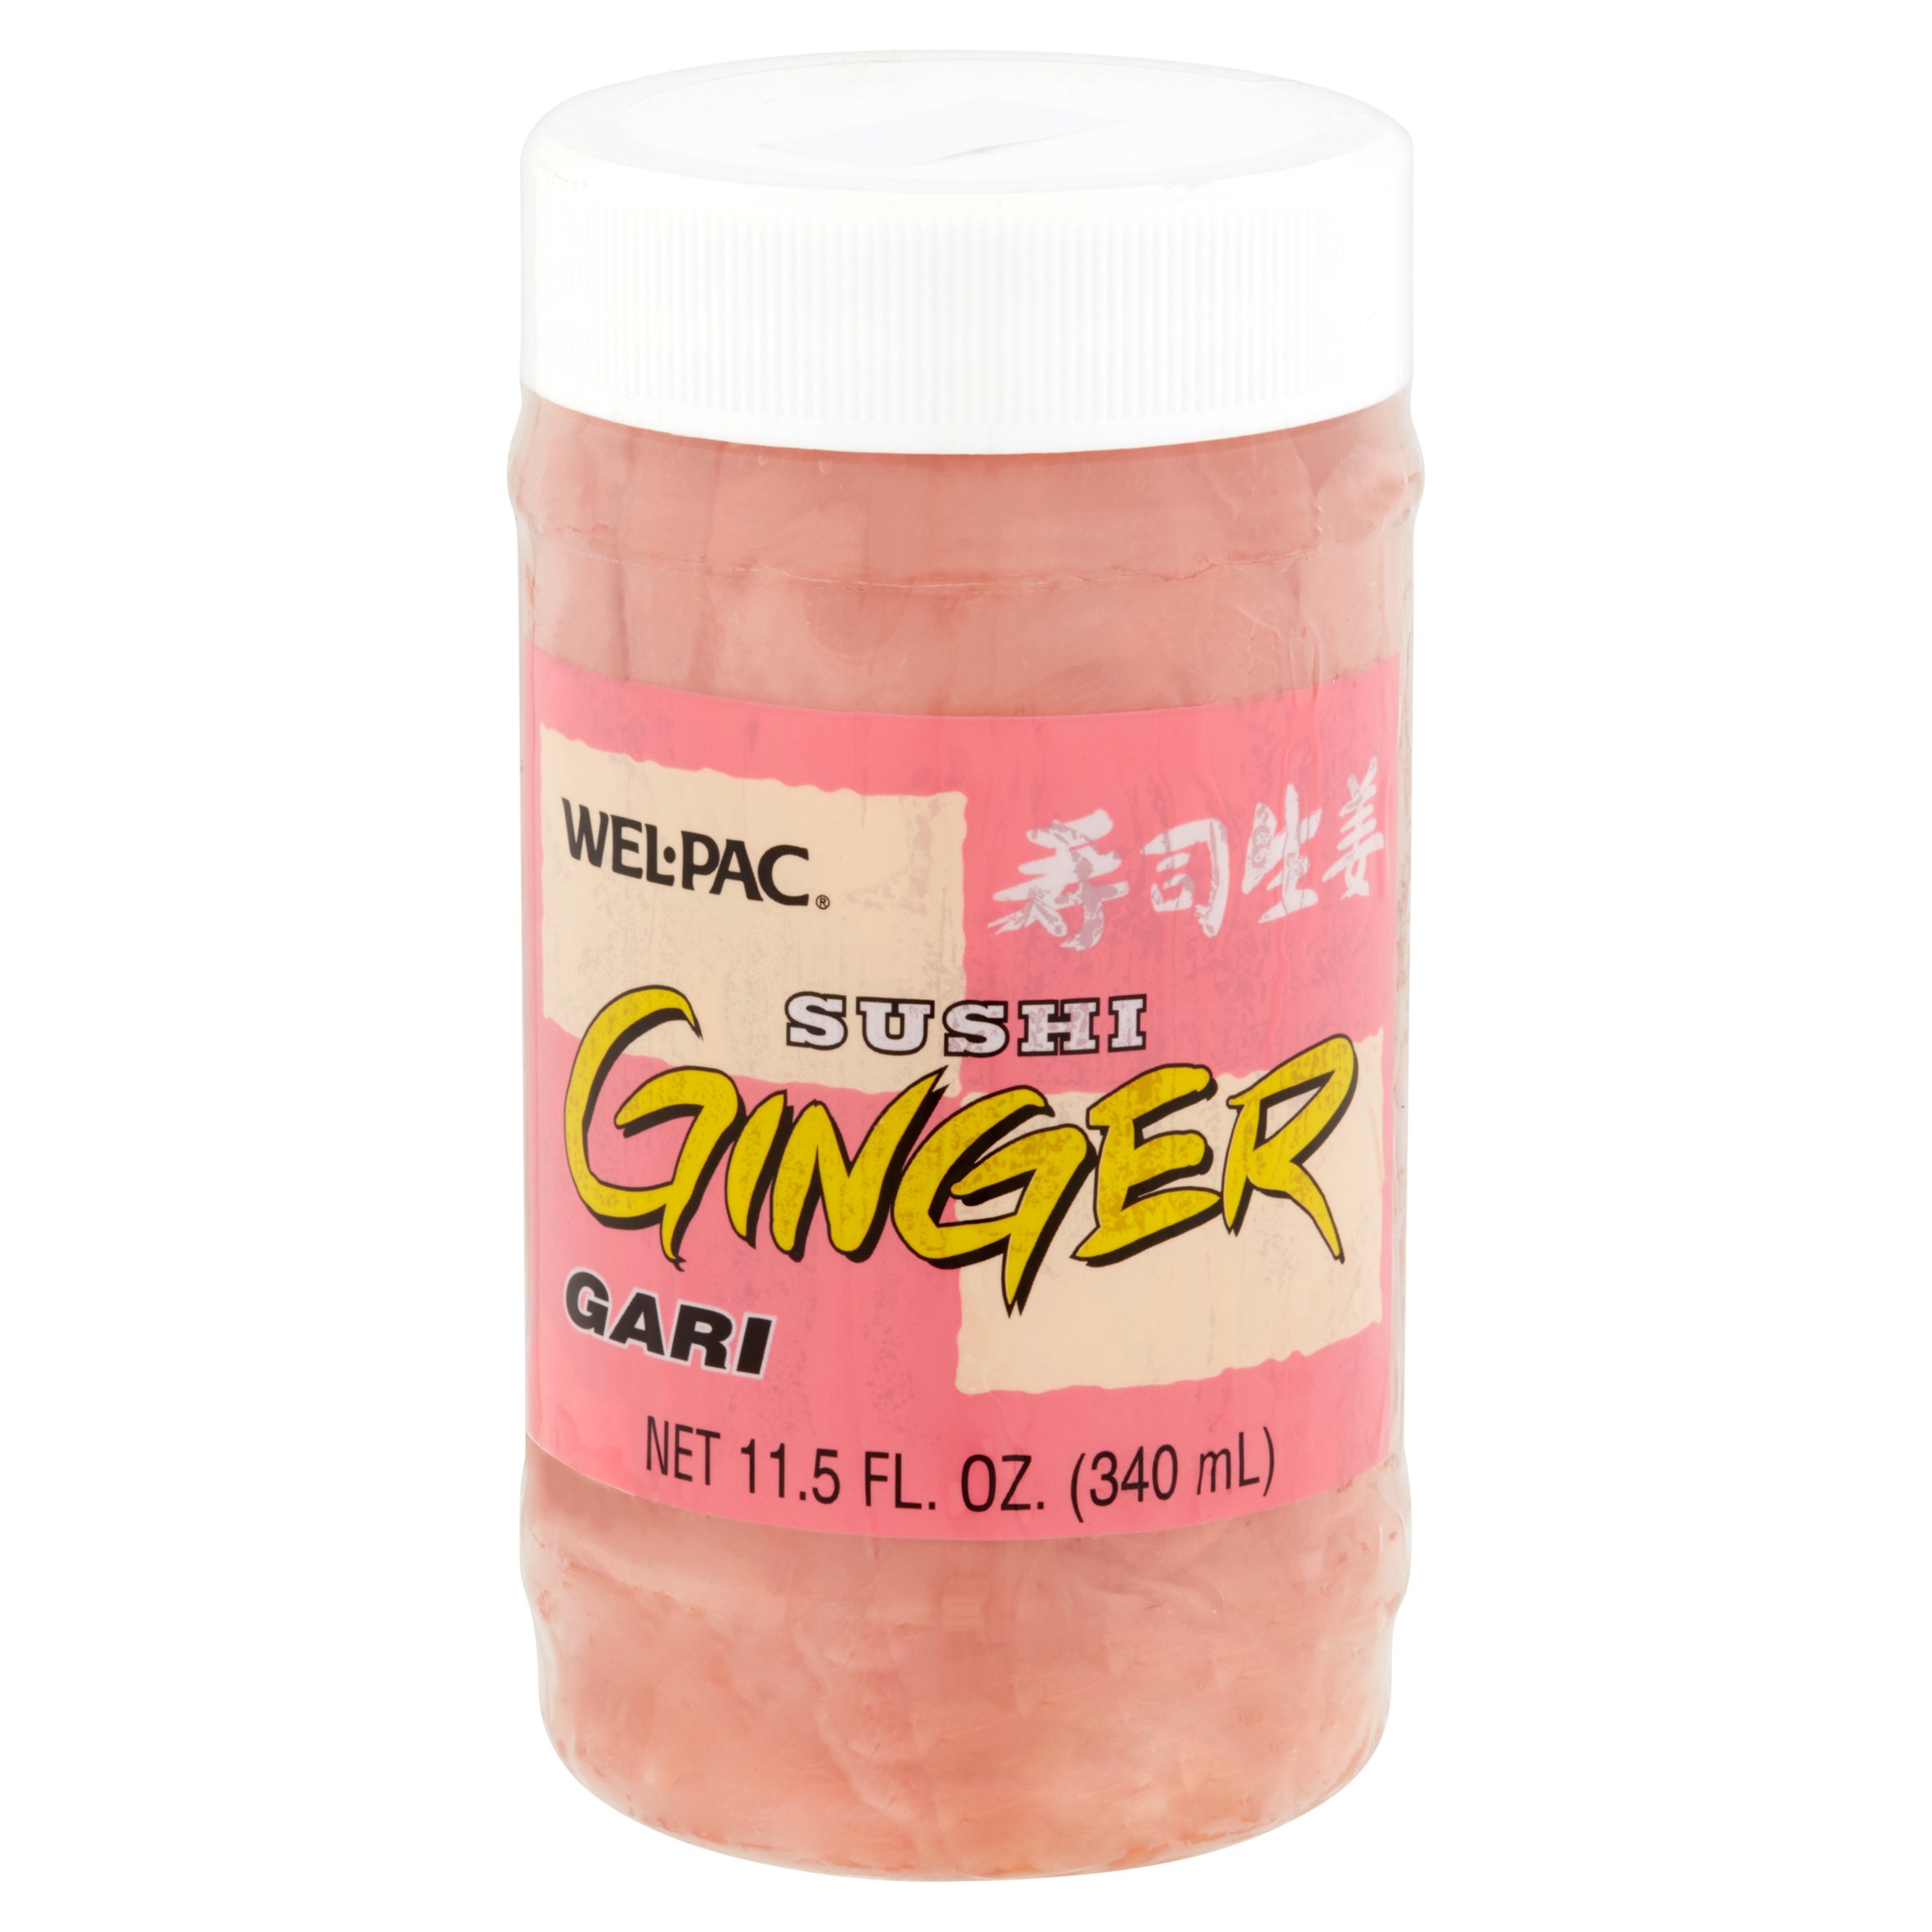 Ginger Pickled 11.5oz